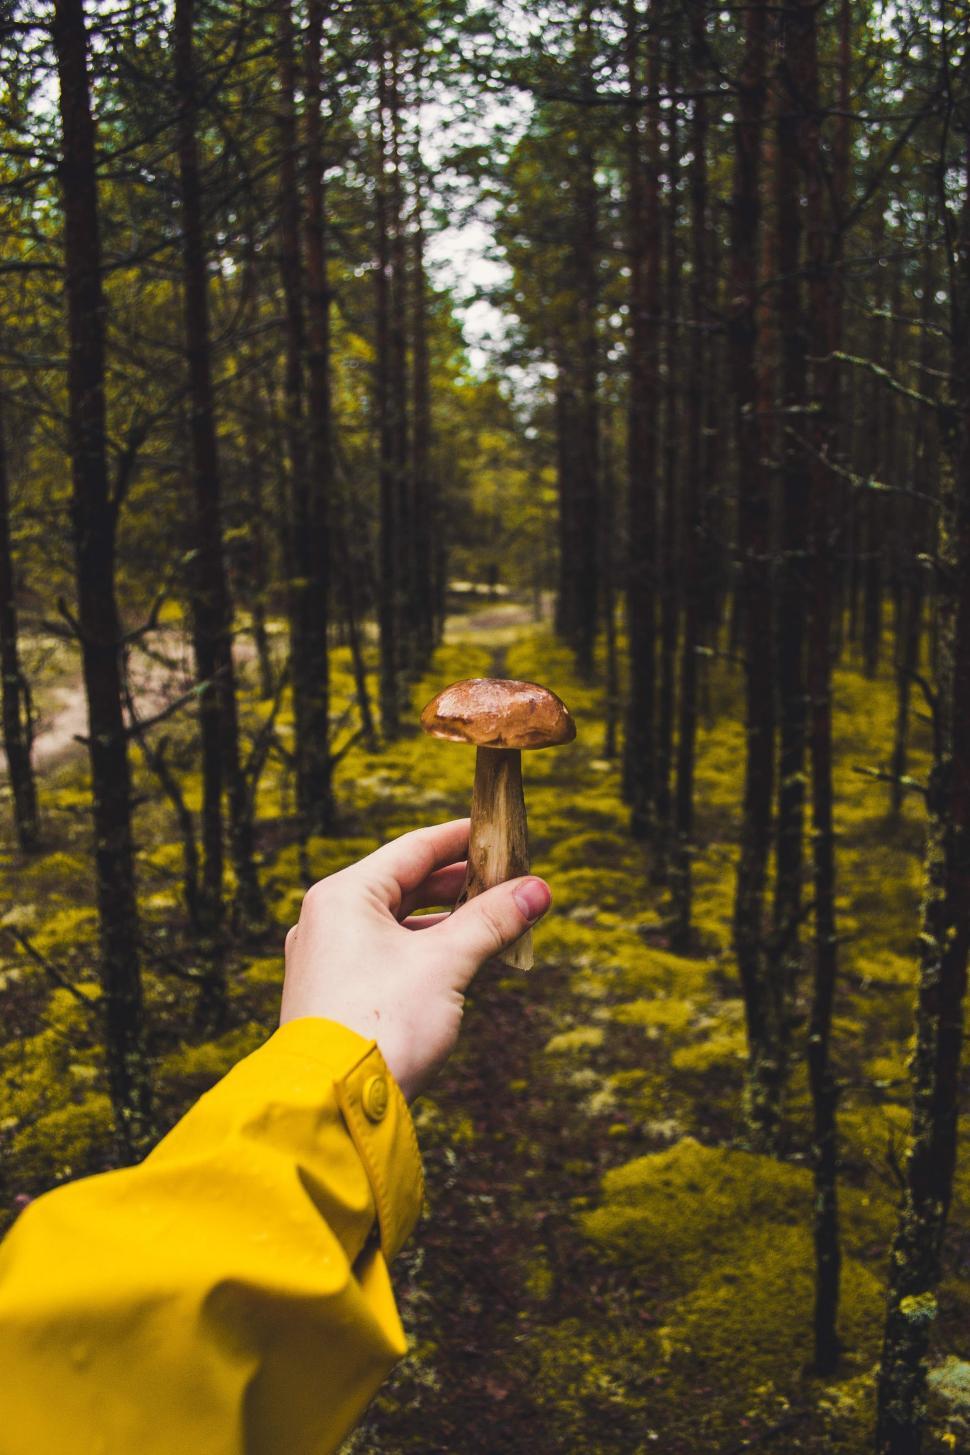 Free Image of Mushroom in Hand  